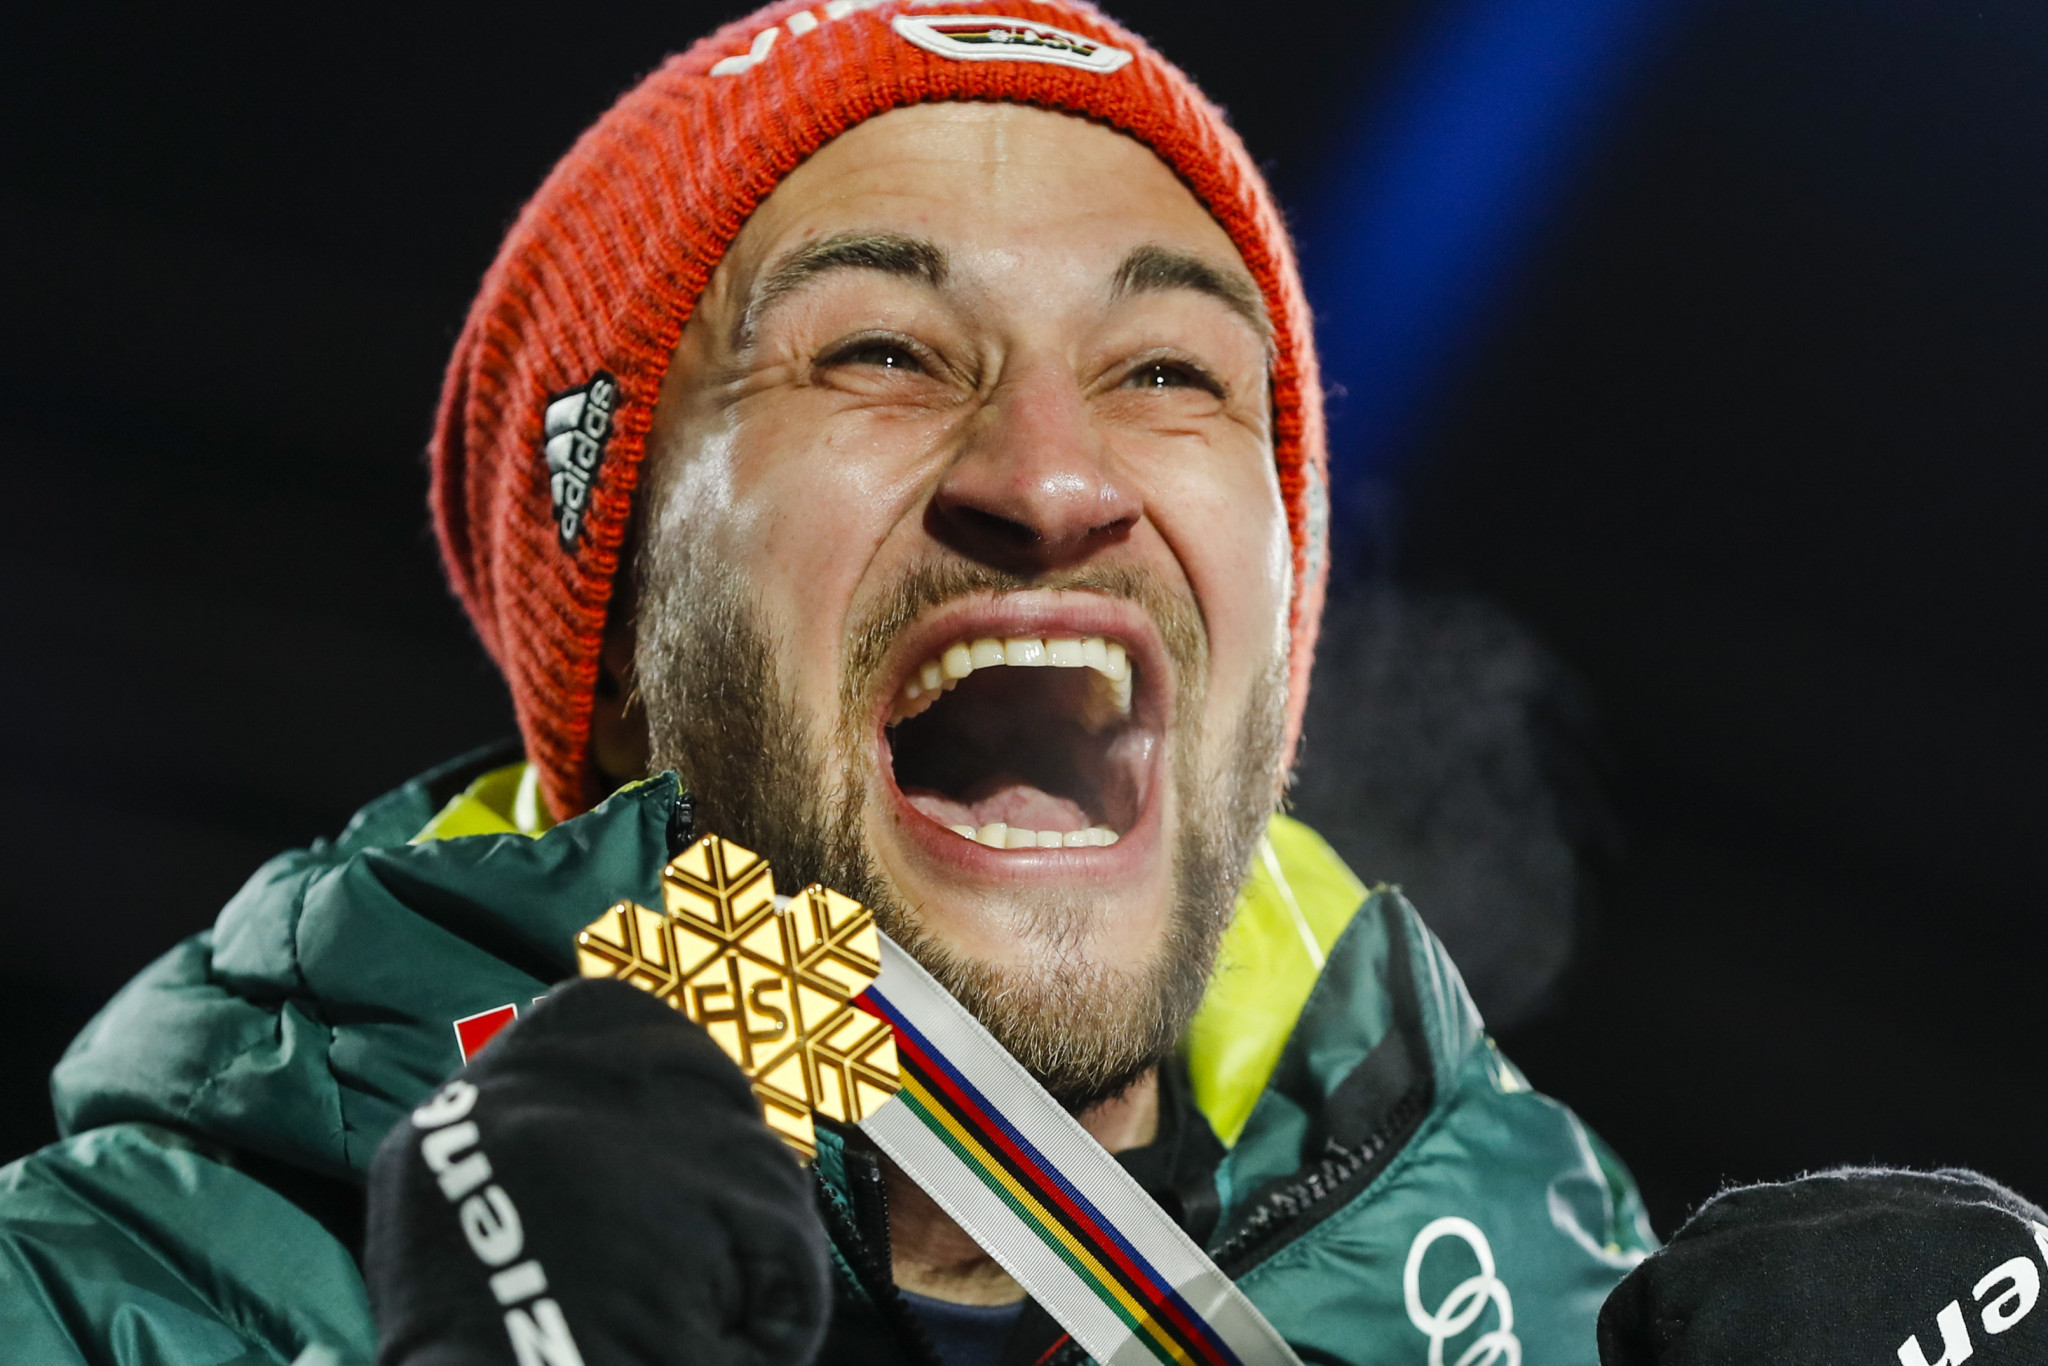 Eisenbichler crowned men's large hill king at FIS Nordic World Ski Championships